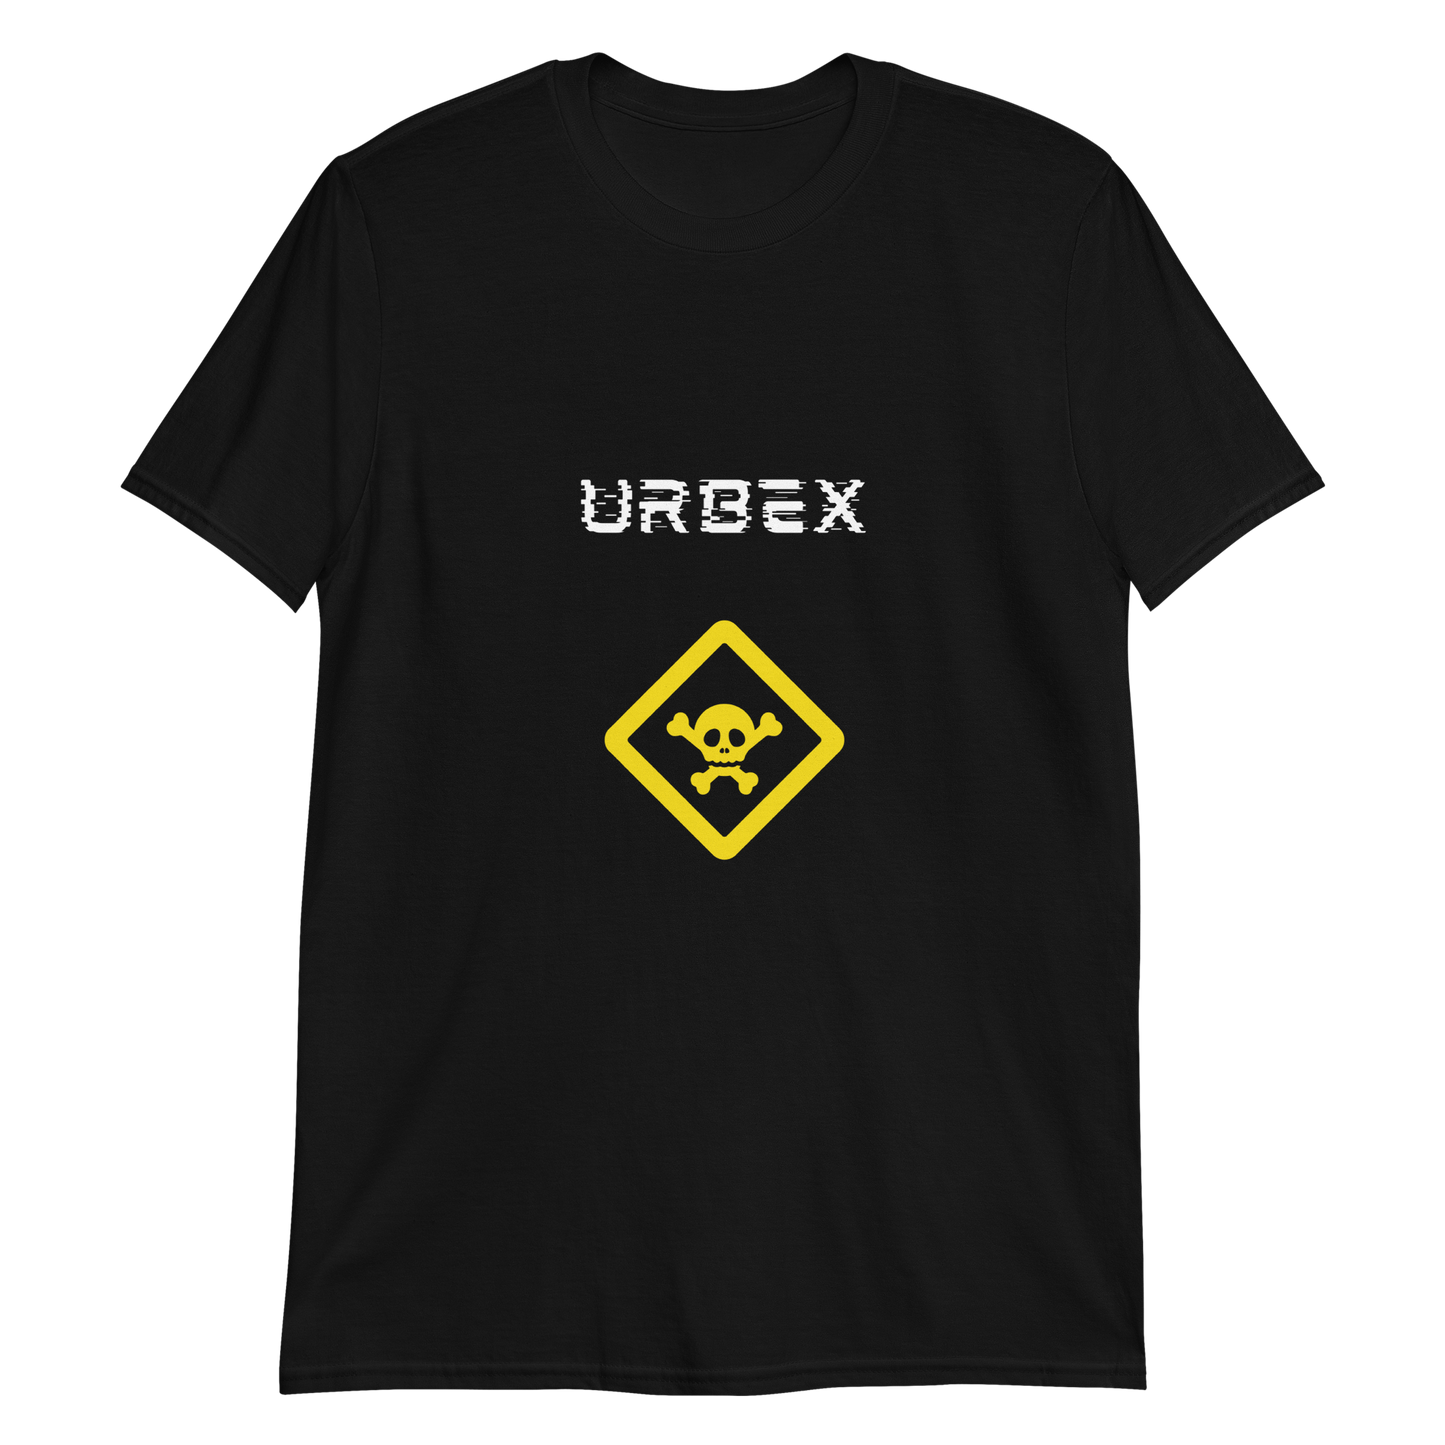 Black and Yellow Urbex Skull Unisex T-Shirt │ Abandoned World Photography Urbex Shop